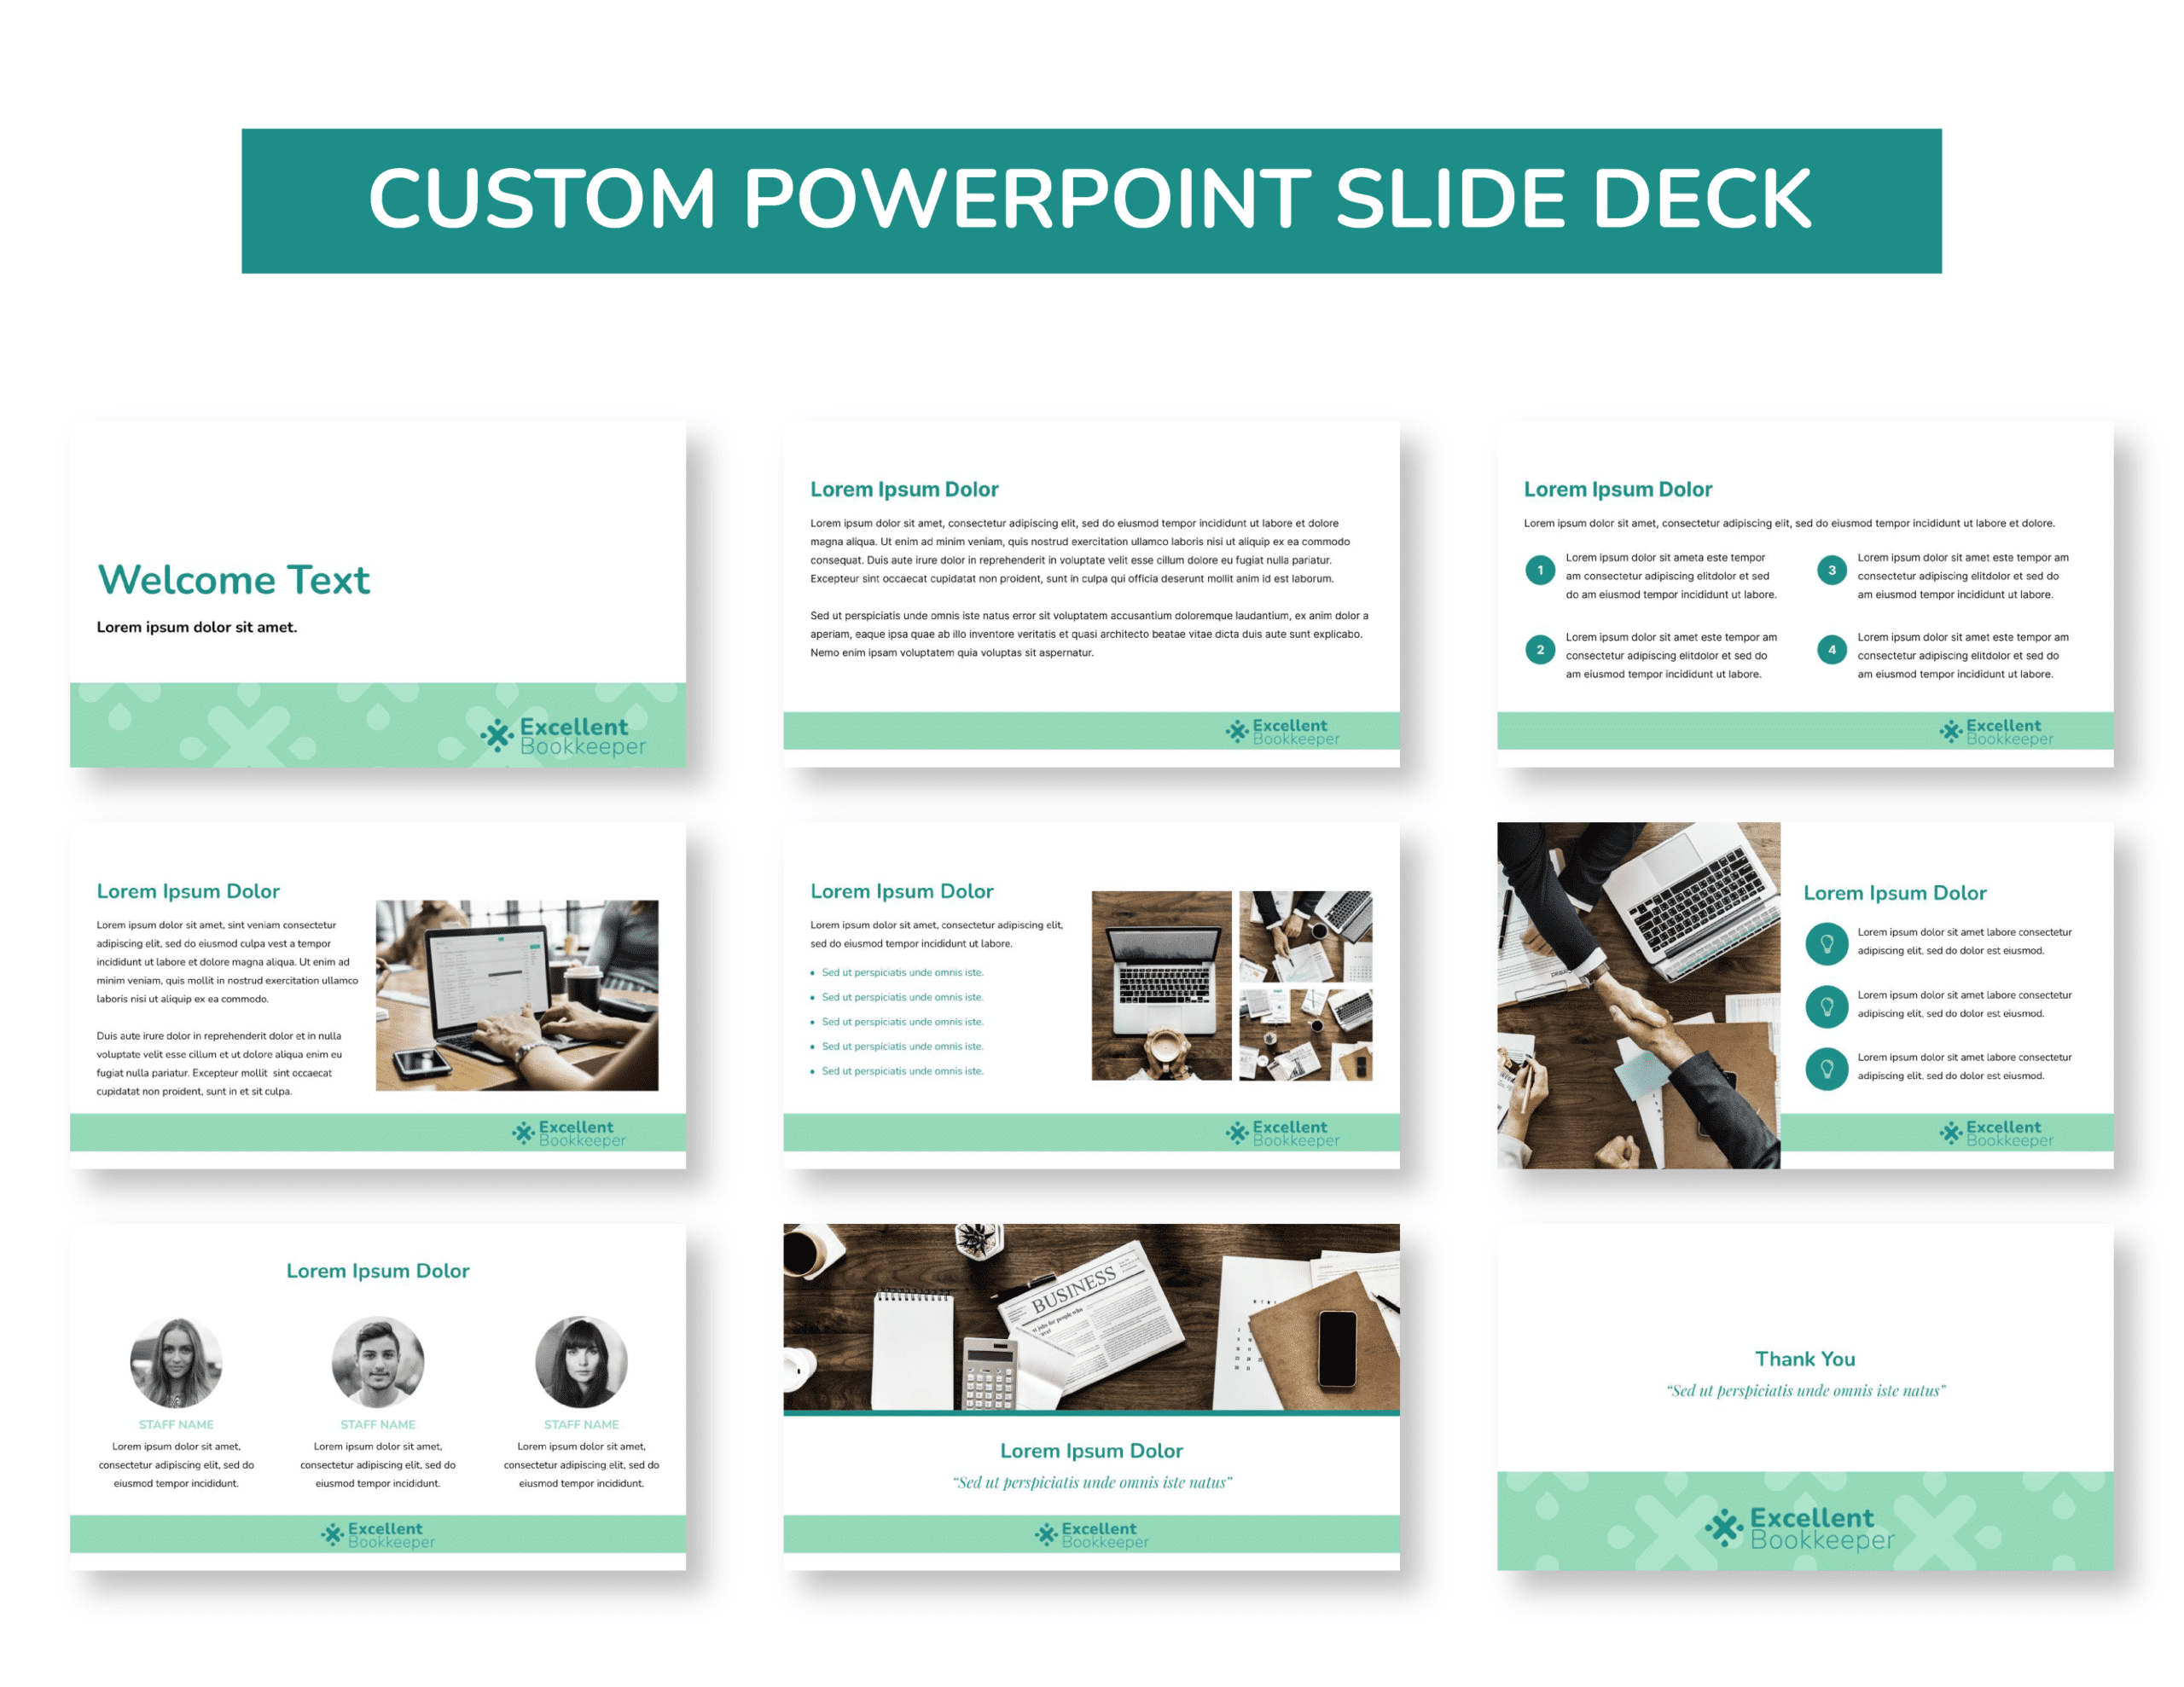 05Excellent__Custom PowerPoint Slide Deck